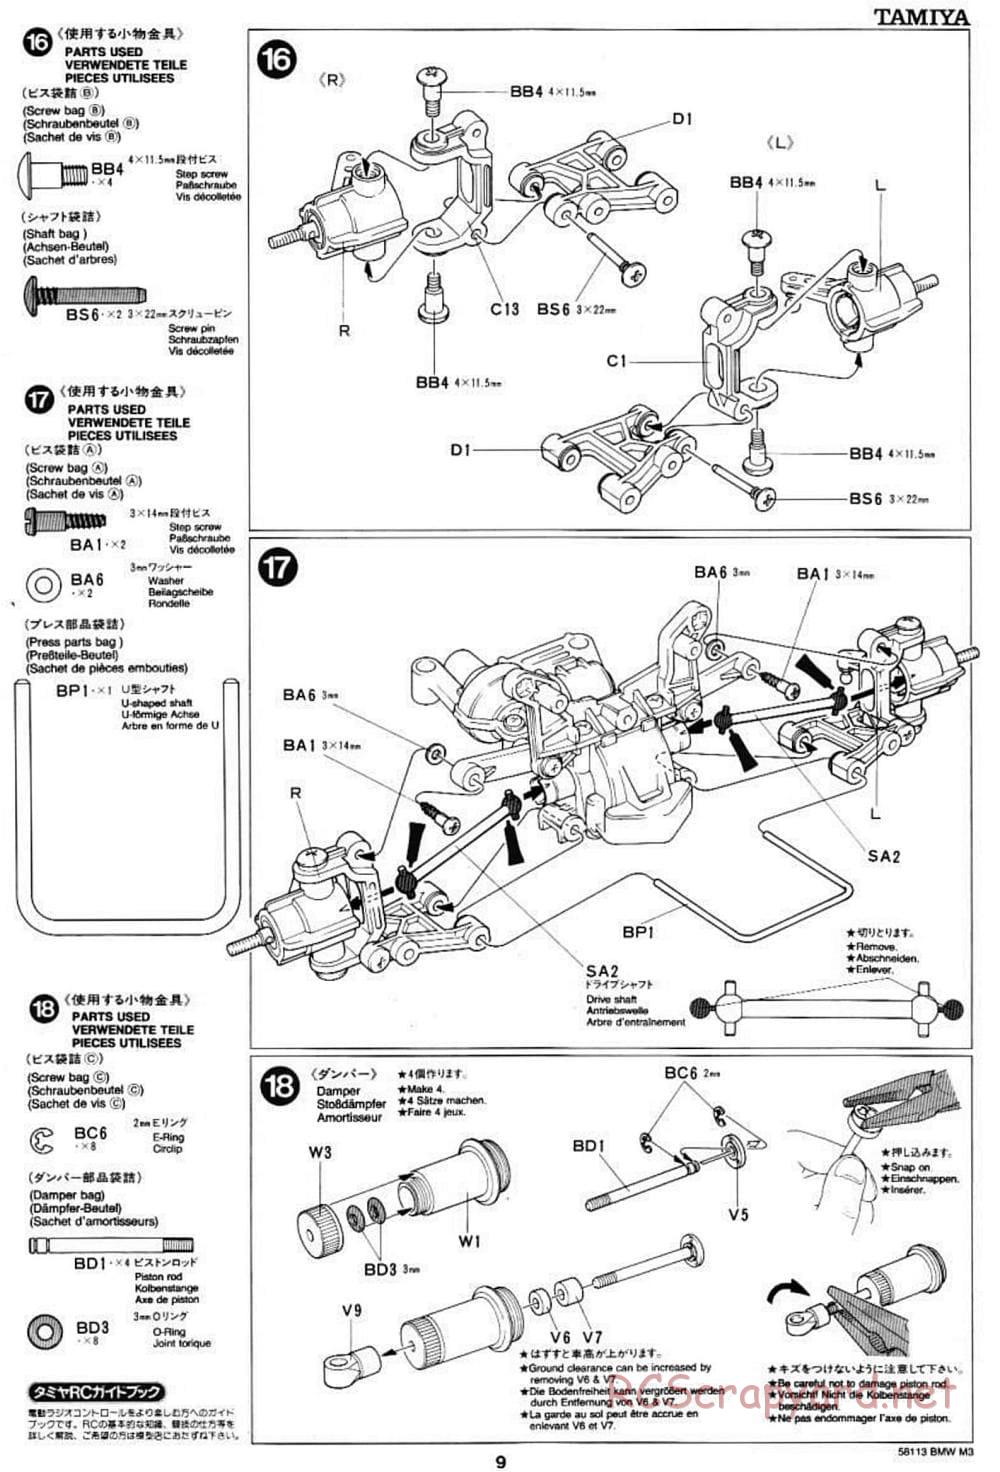 Tamiya - Schnitzer BMW M3 Sport Evo - TA-01 Chassis - Manual - Page 9